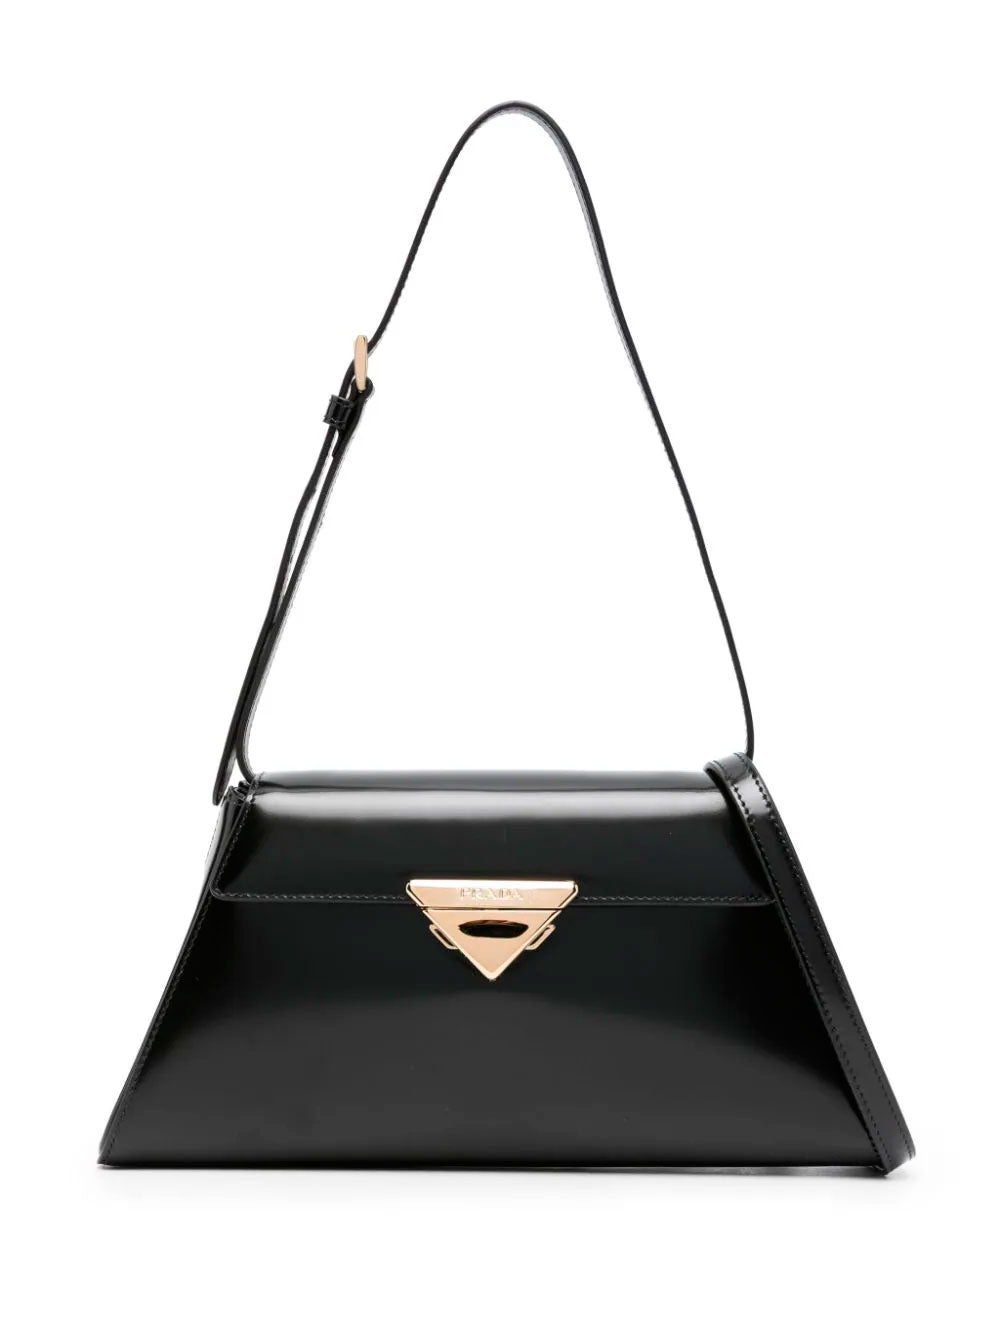 Prada clutch bag in nylon and saffiano leather with triangular logo